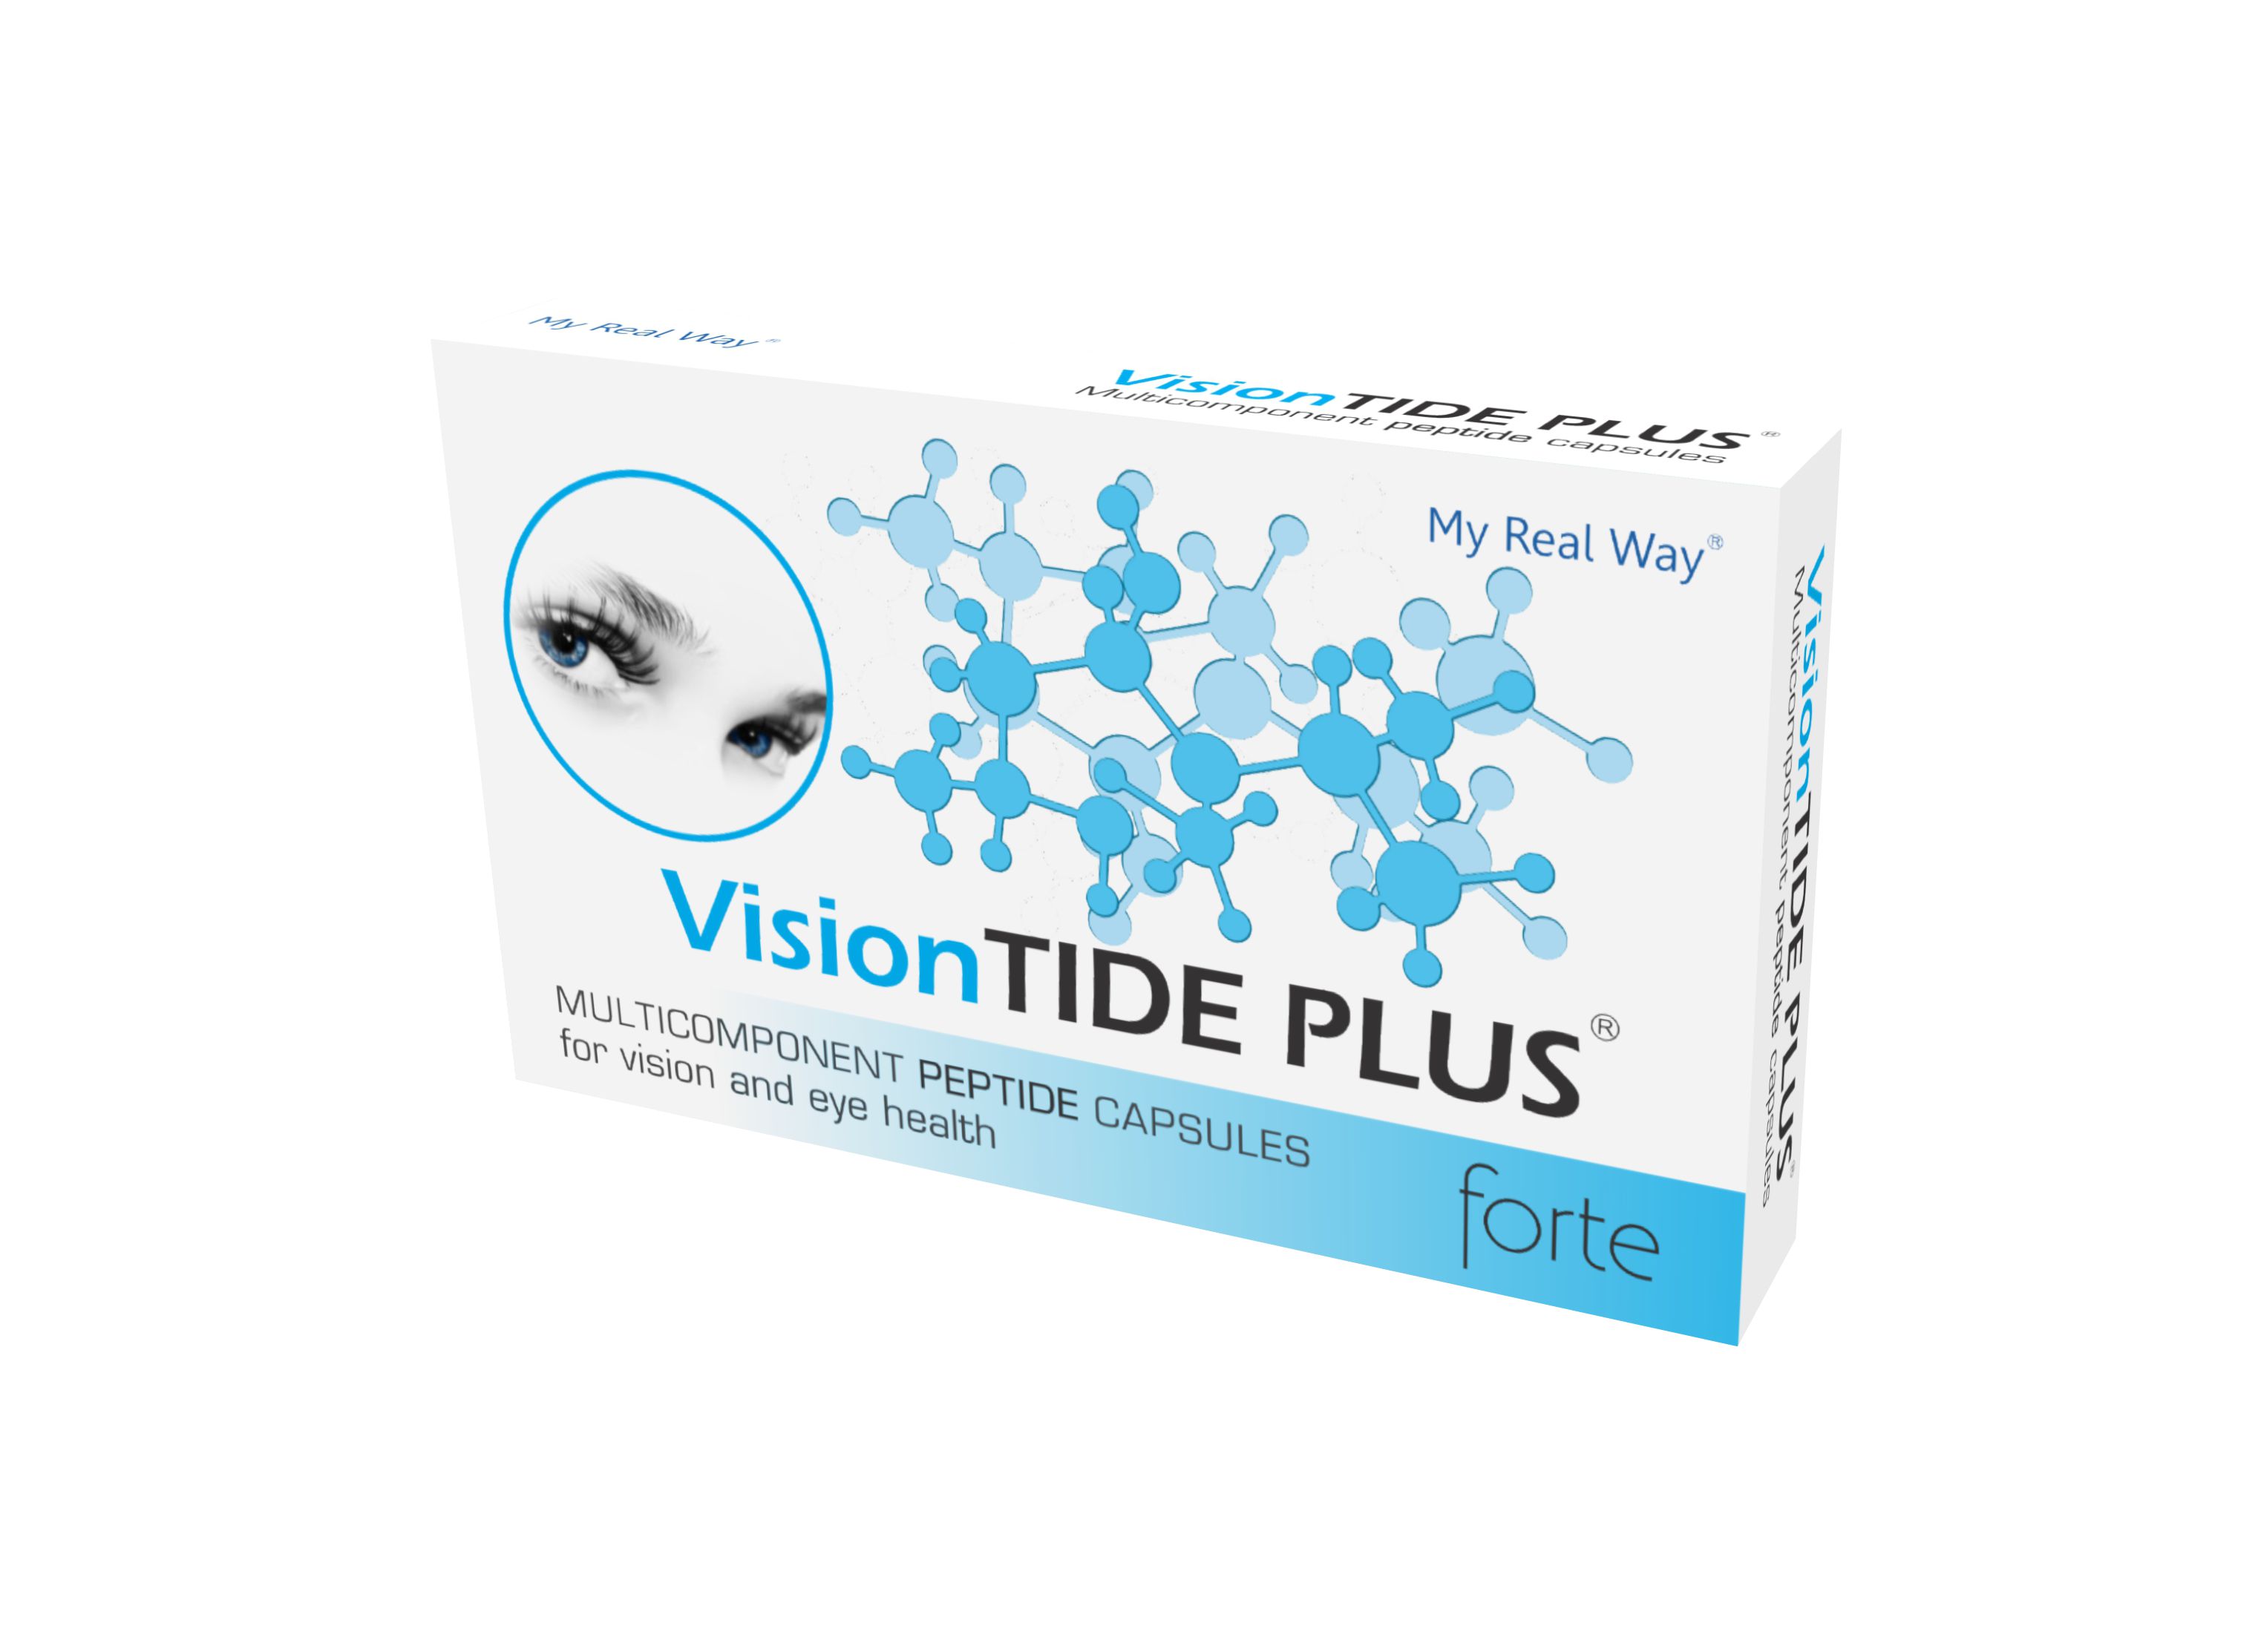 VisionTIDE PLUS peptides for eyesight